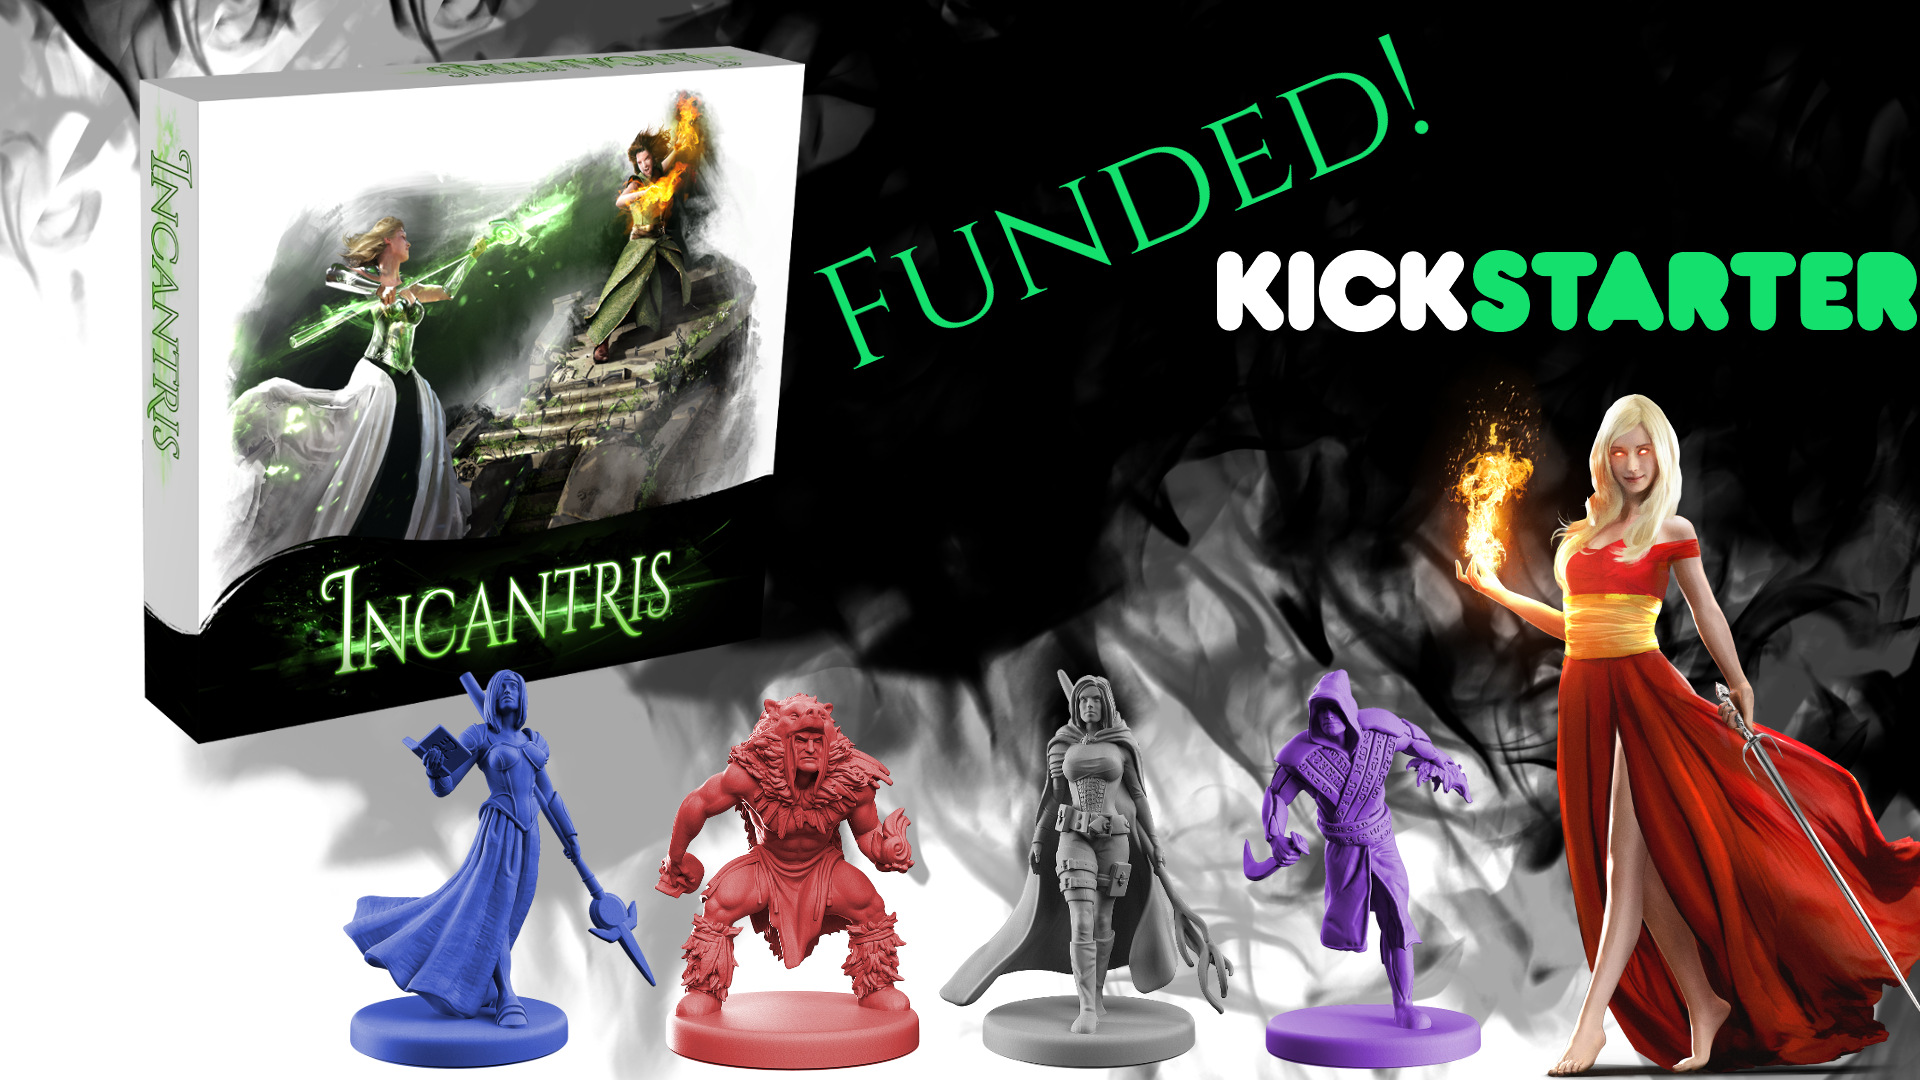 Funded on Kickstarter – Incantris!